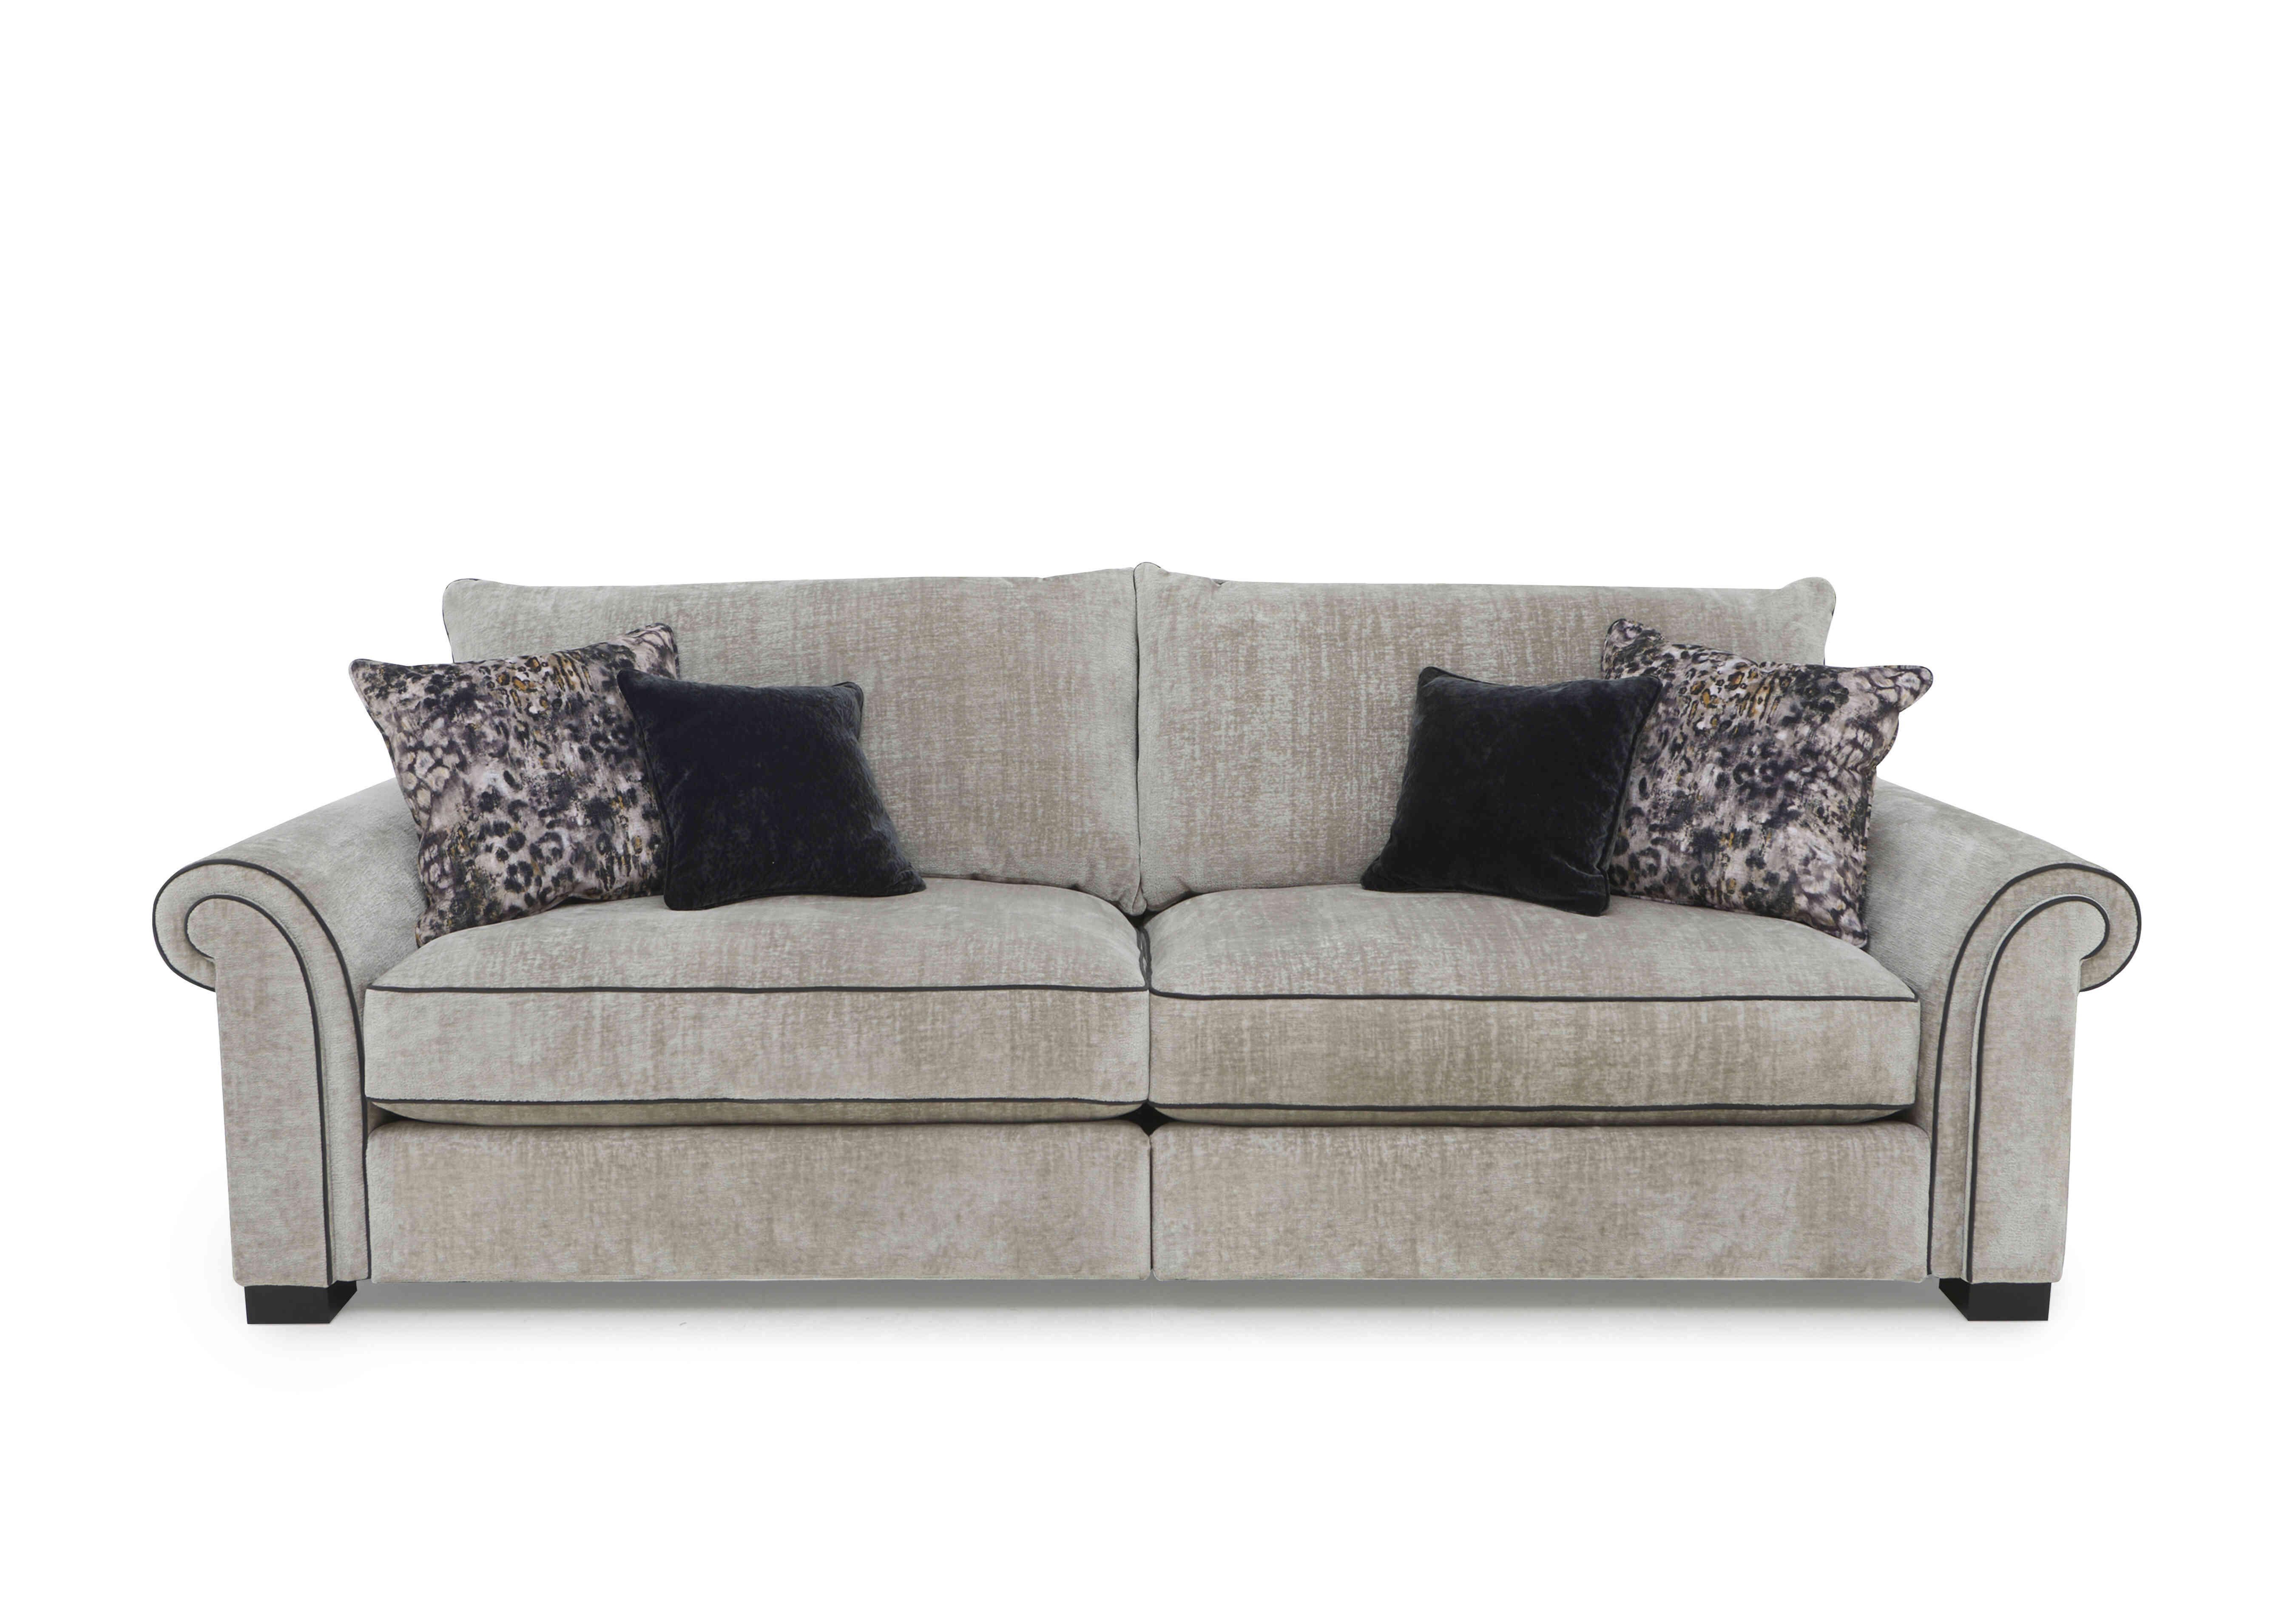 Modern Classics St James Park 4 Seater Split Frame Sofa in Remini Oyster Cp Mf on Furniture Village